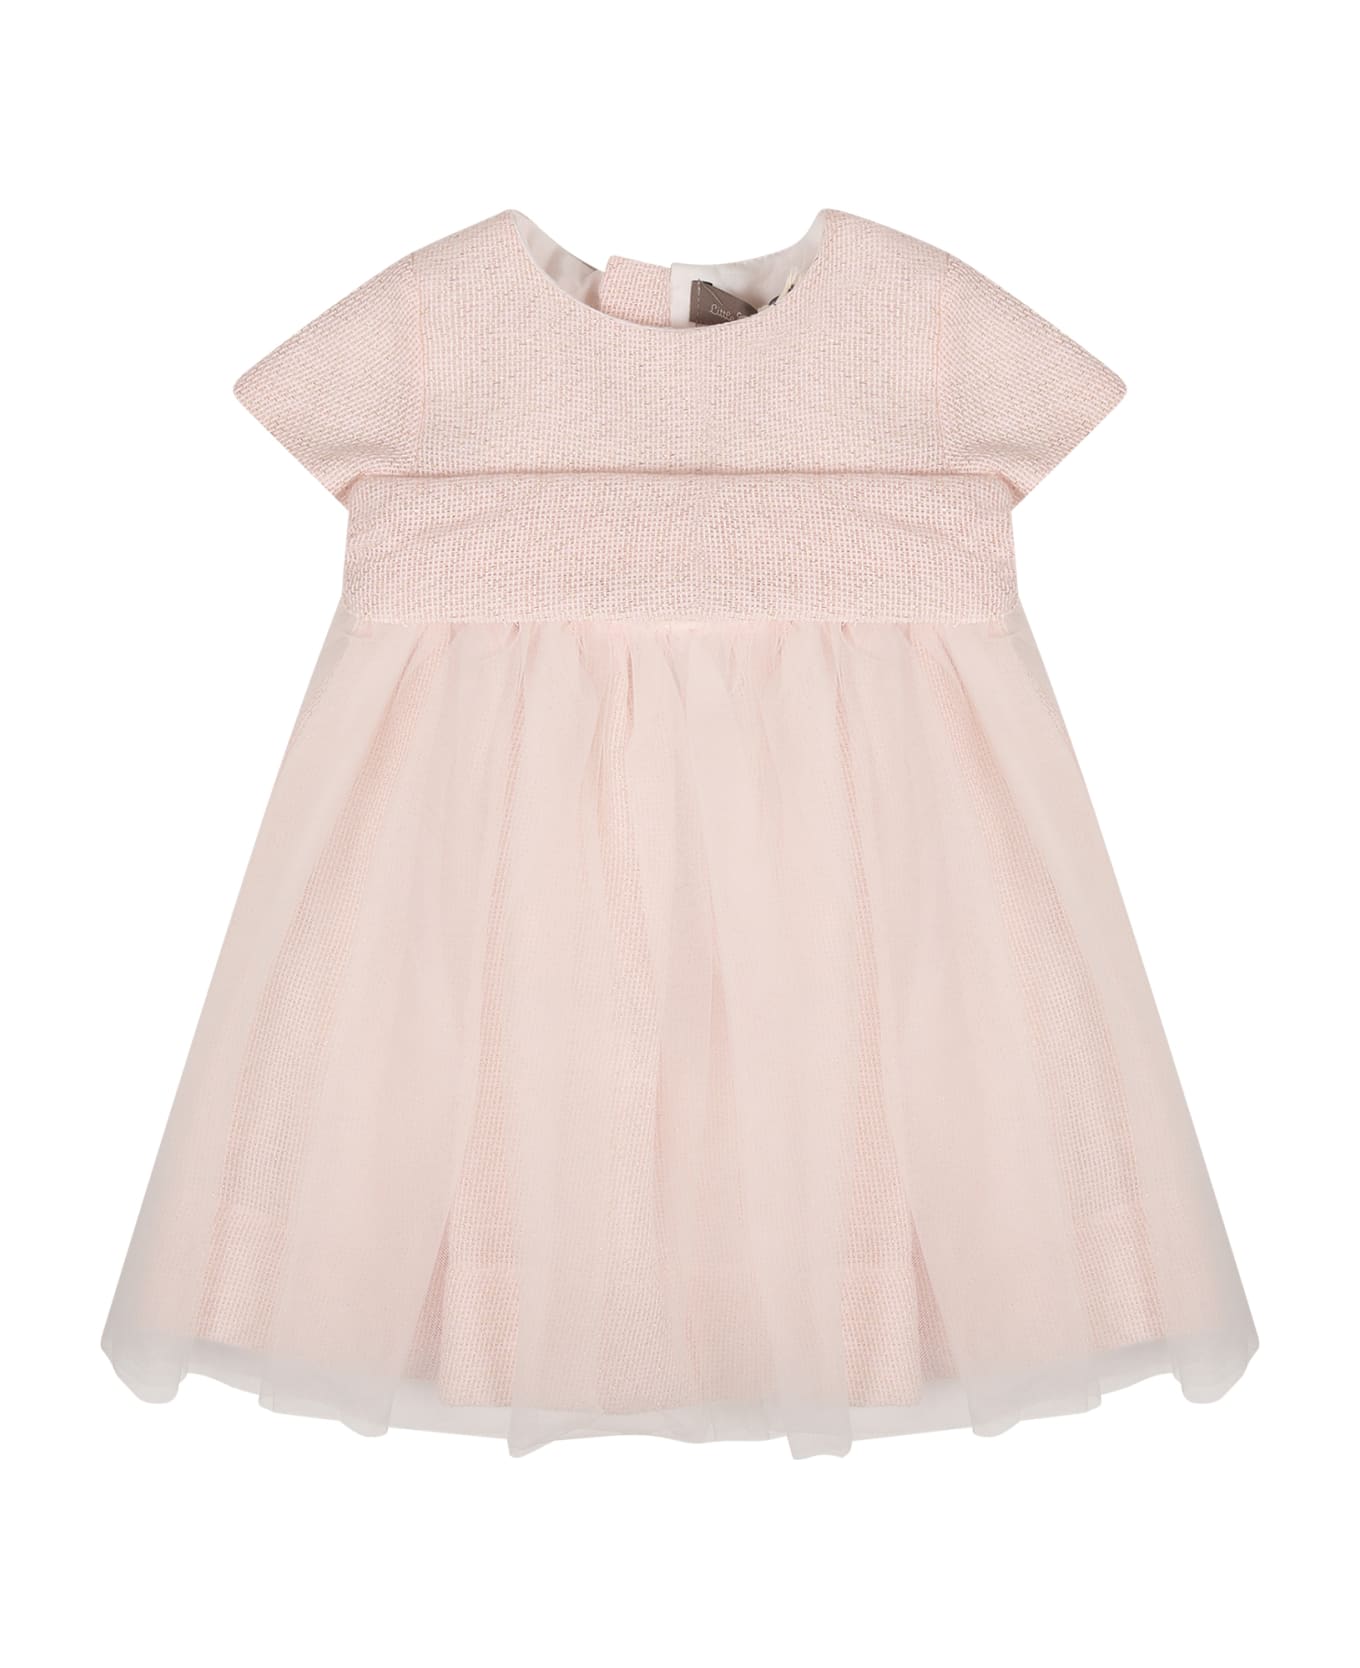 Little Bear Pink Dress For Baby Girl - Pink ウェア